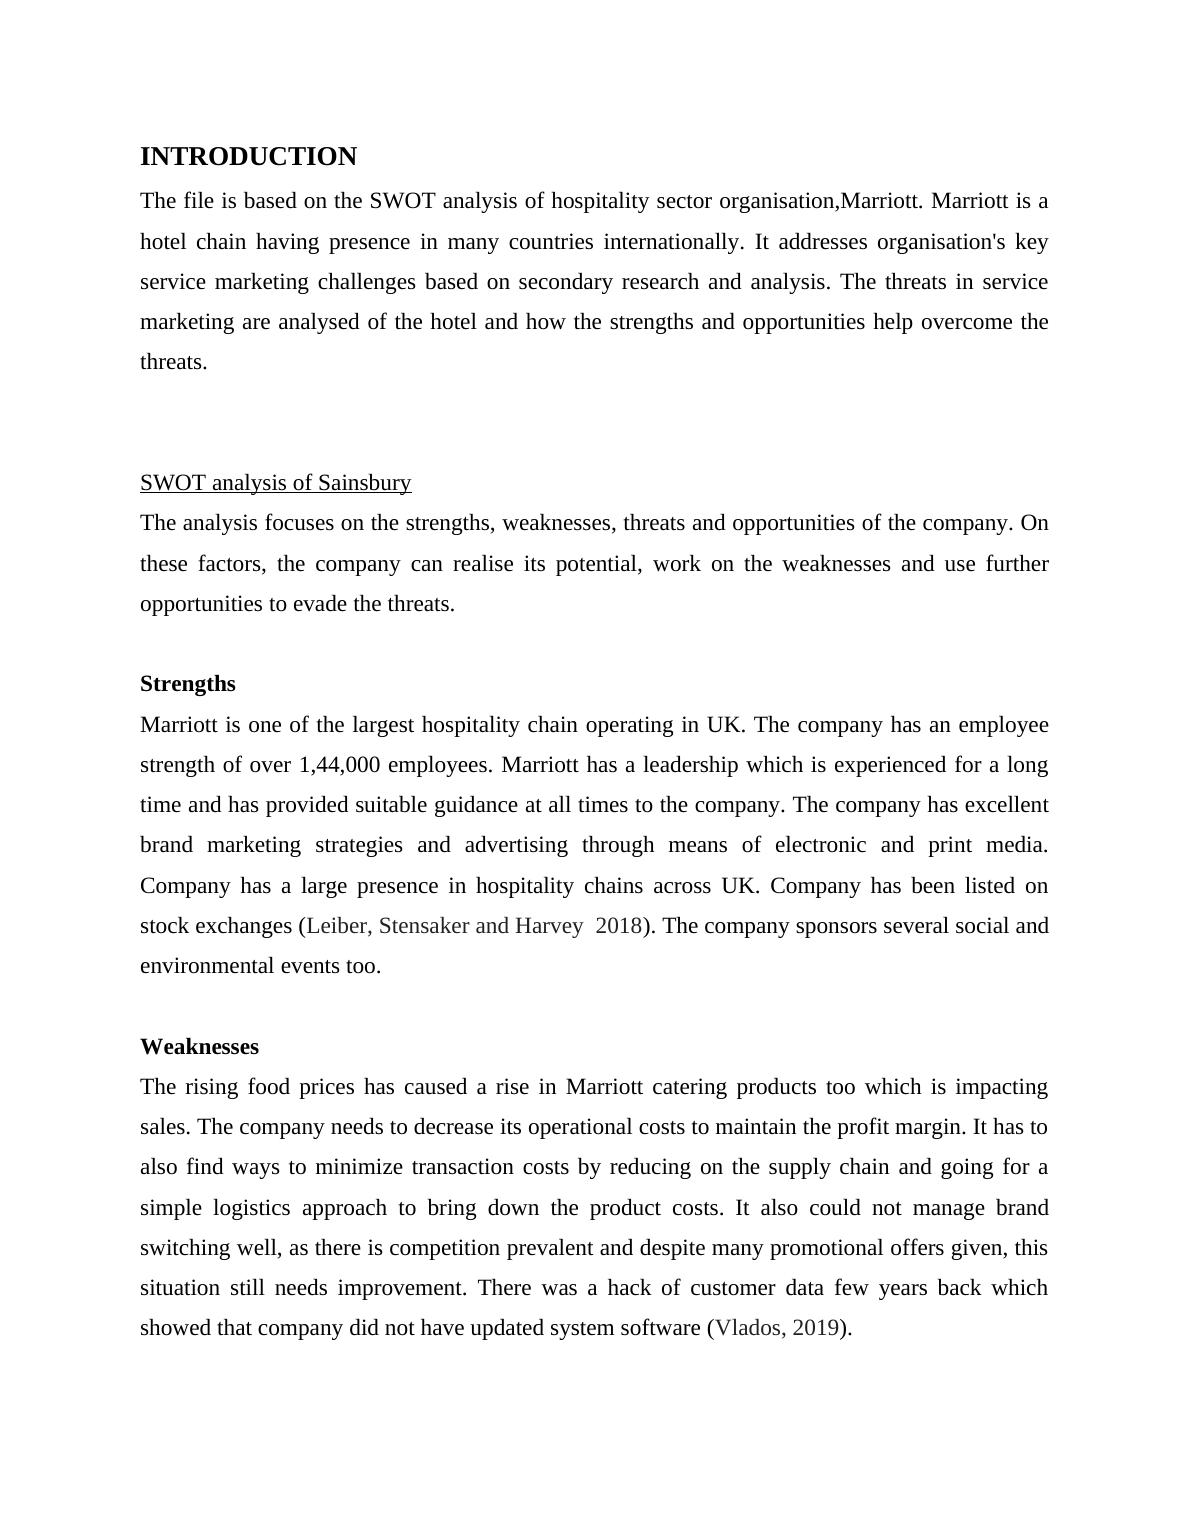 SWOT Analysis of Marriott: Hospitality Sector Organization_3